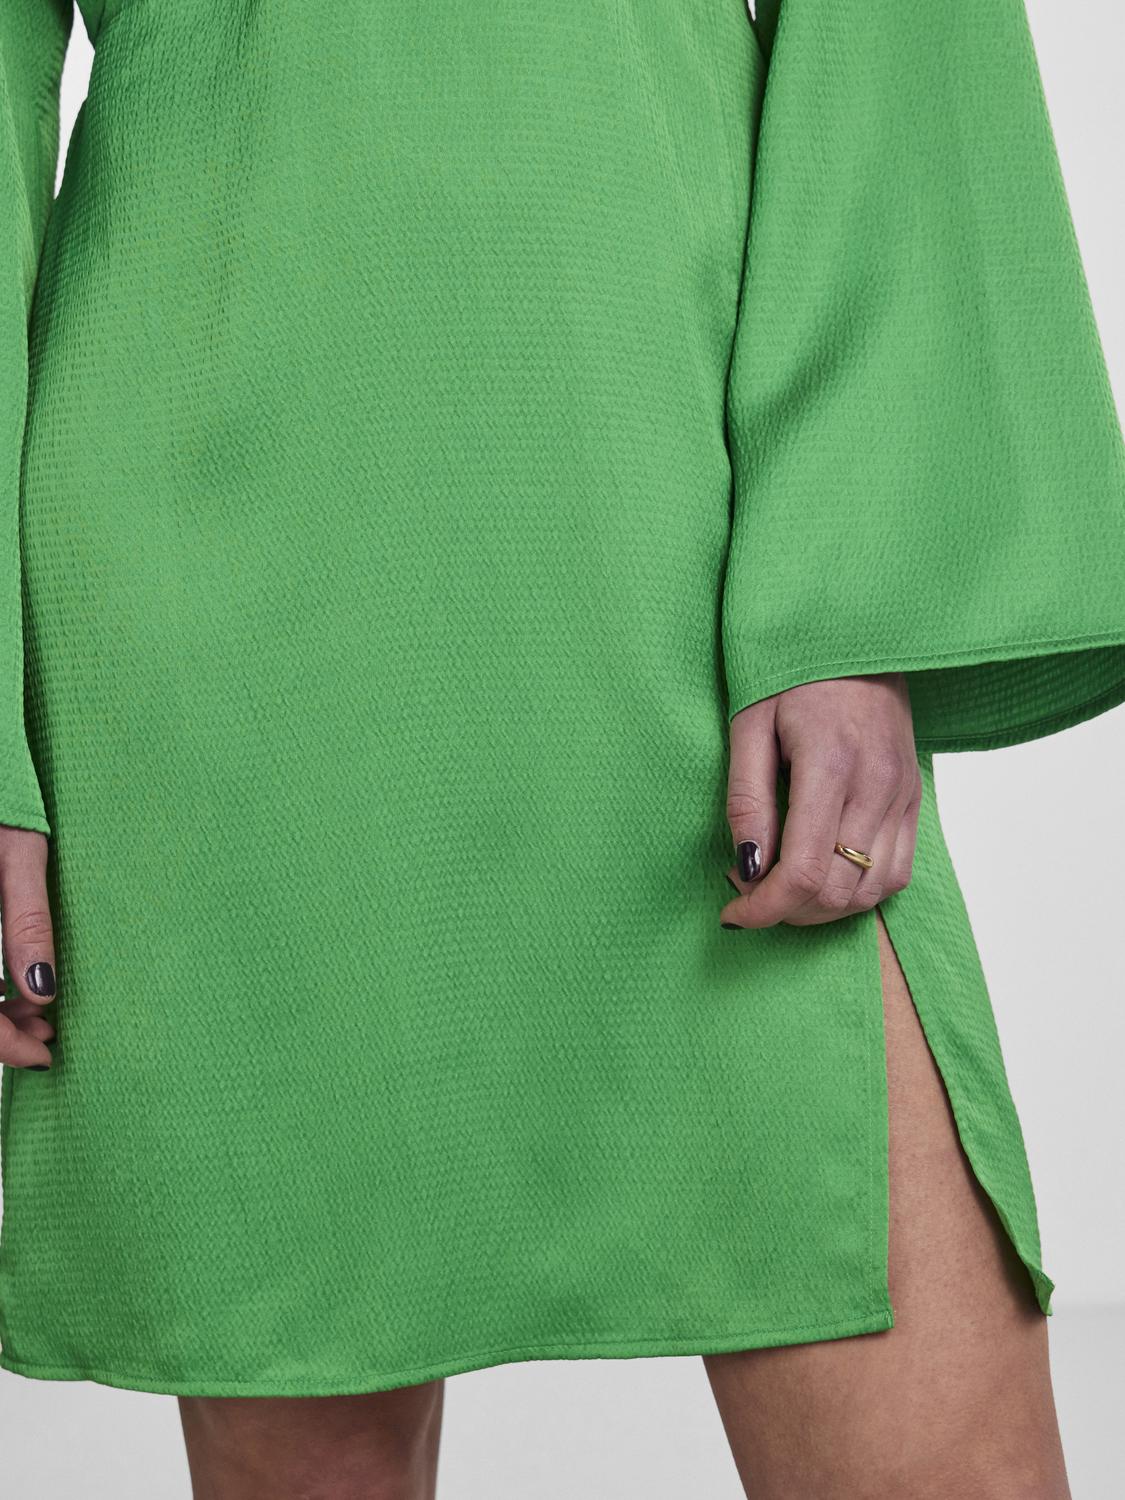 PCSENA Dress - Fern Green